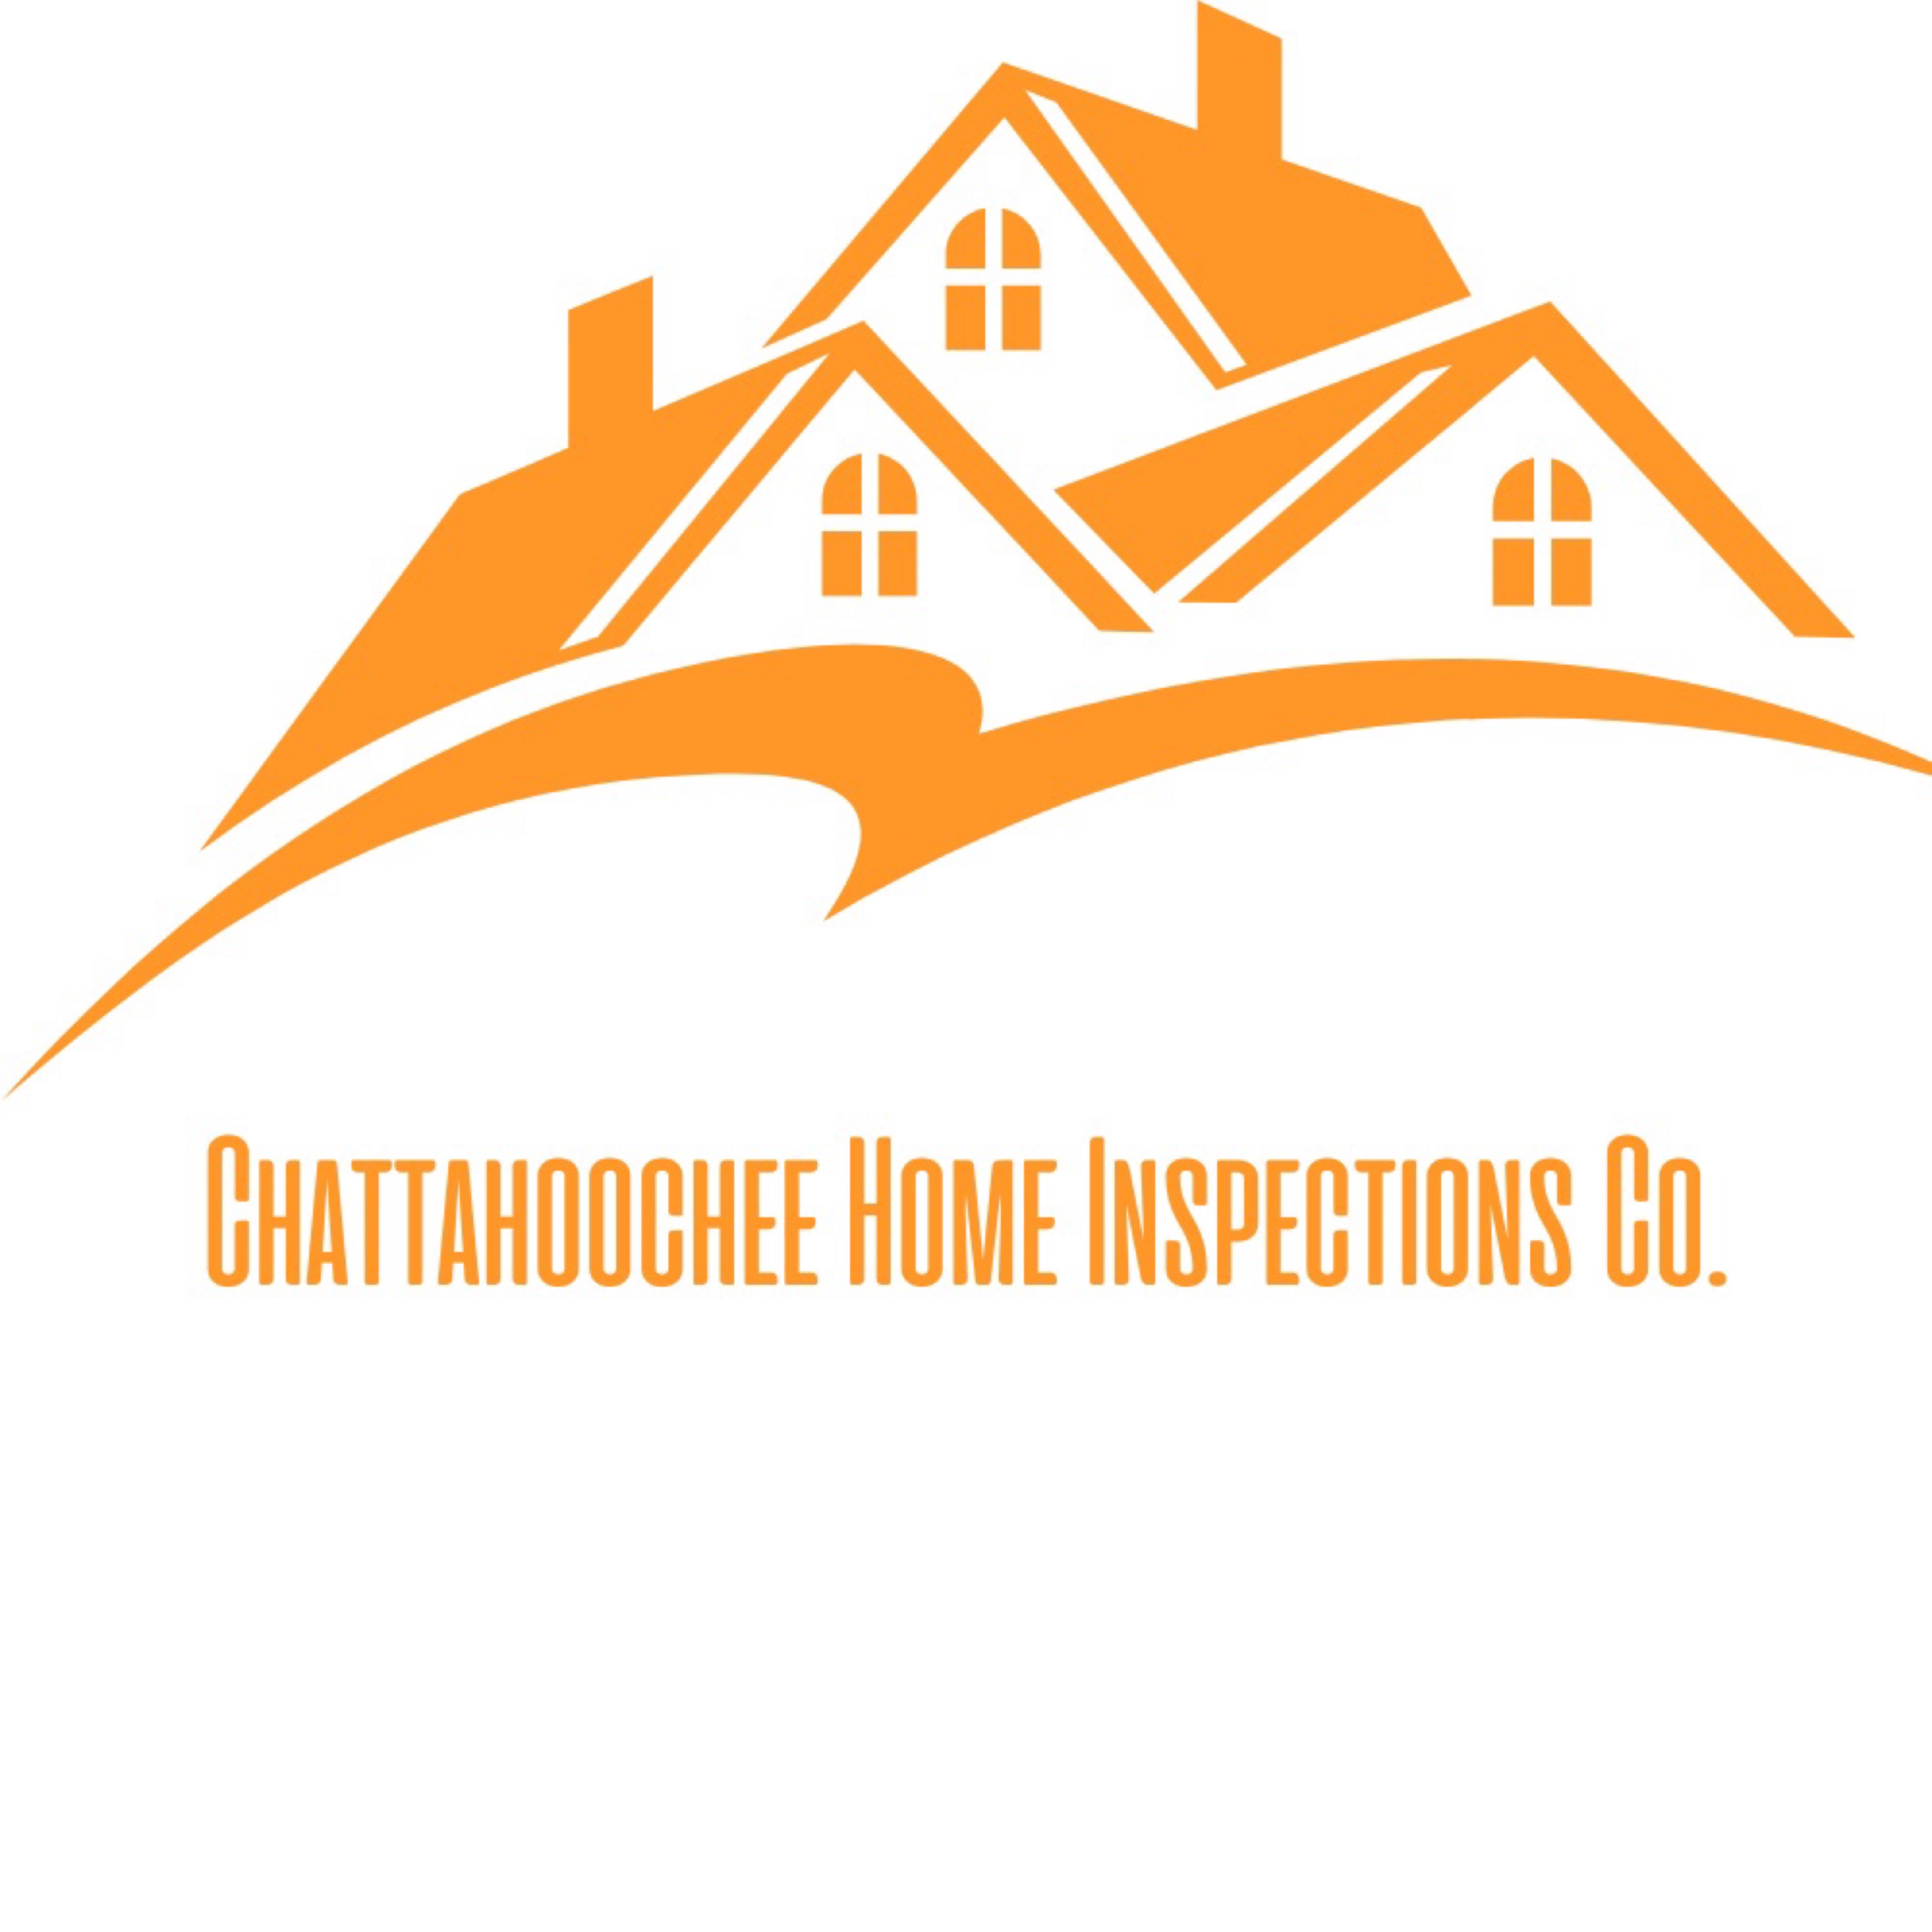 Chattahoochee Home Inspections, Co. Logo